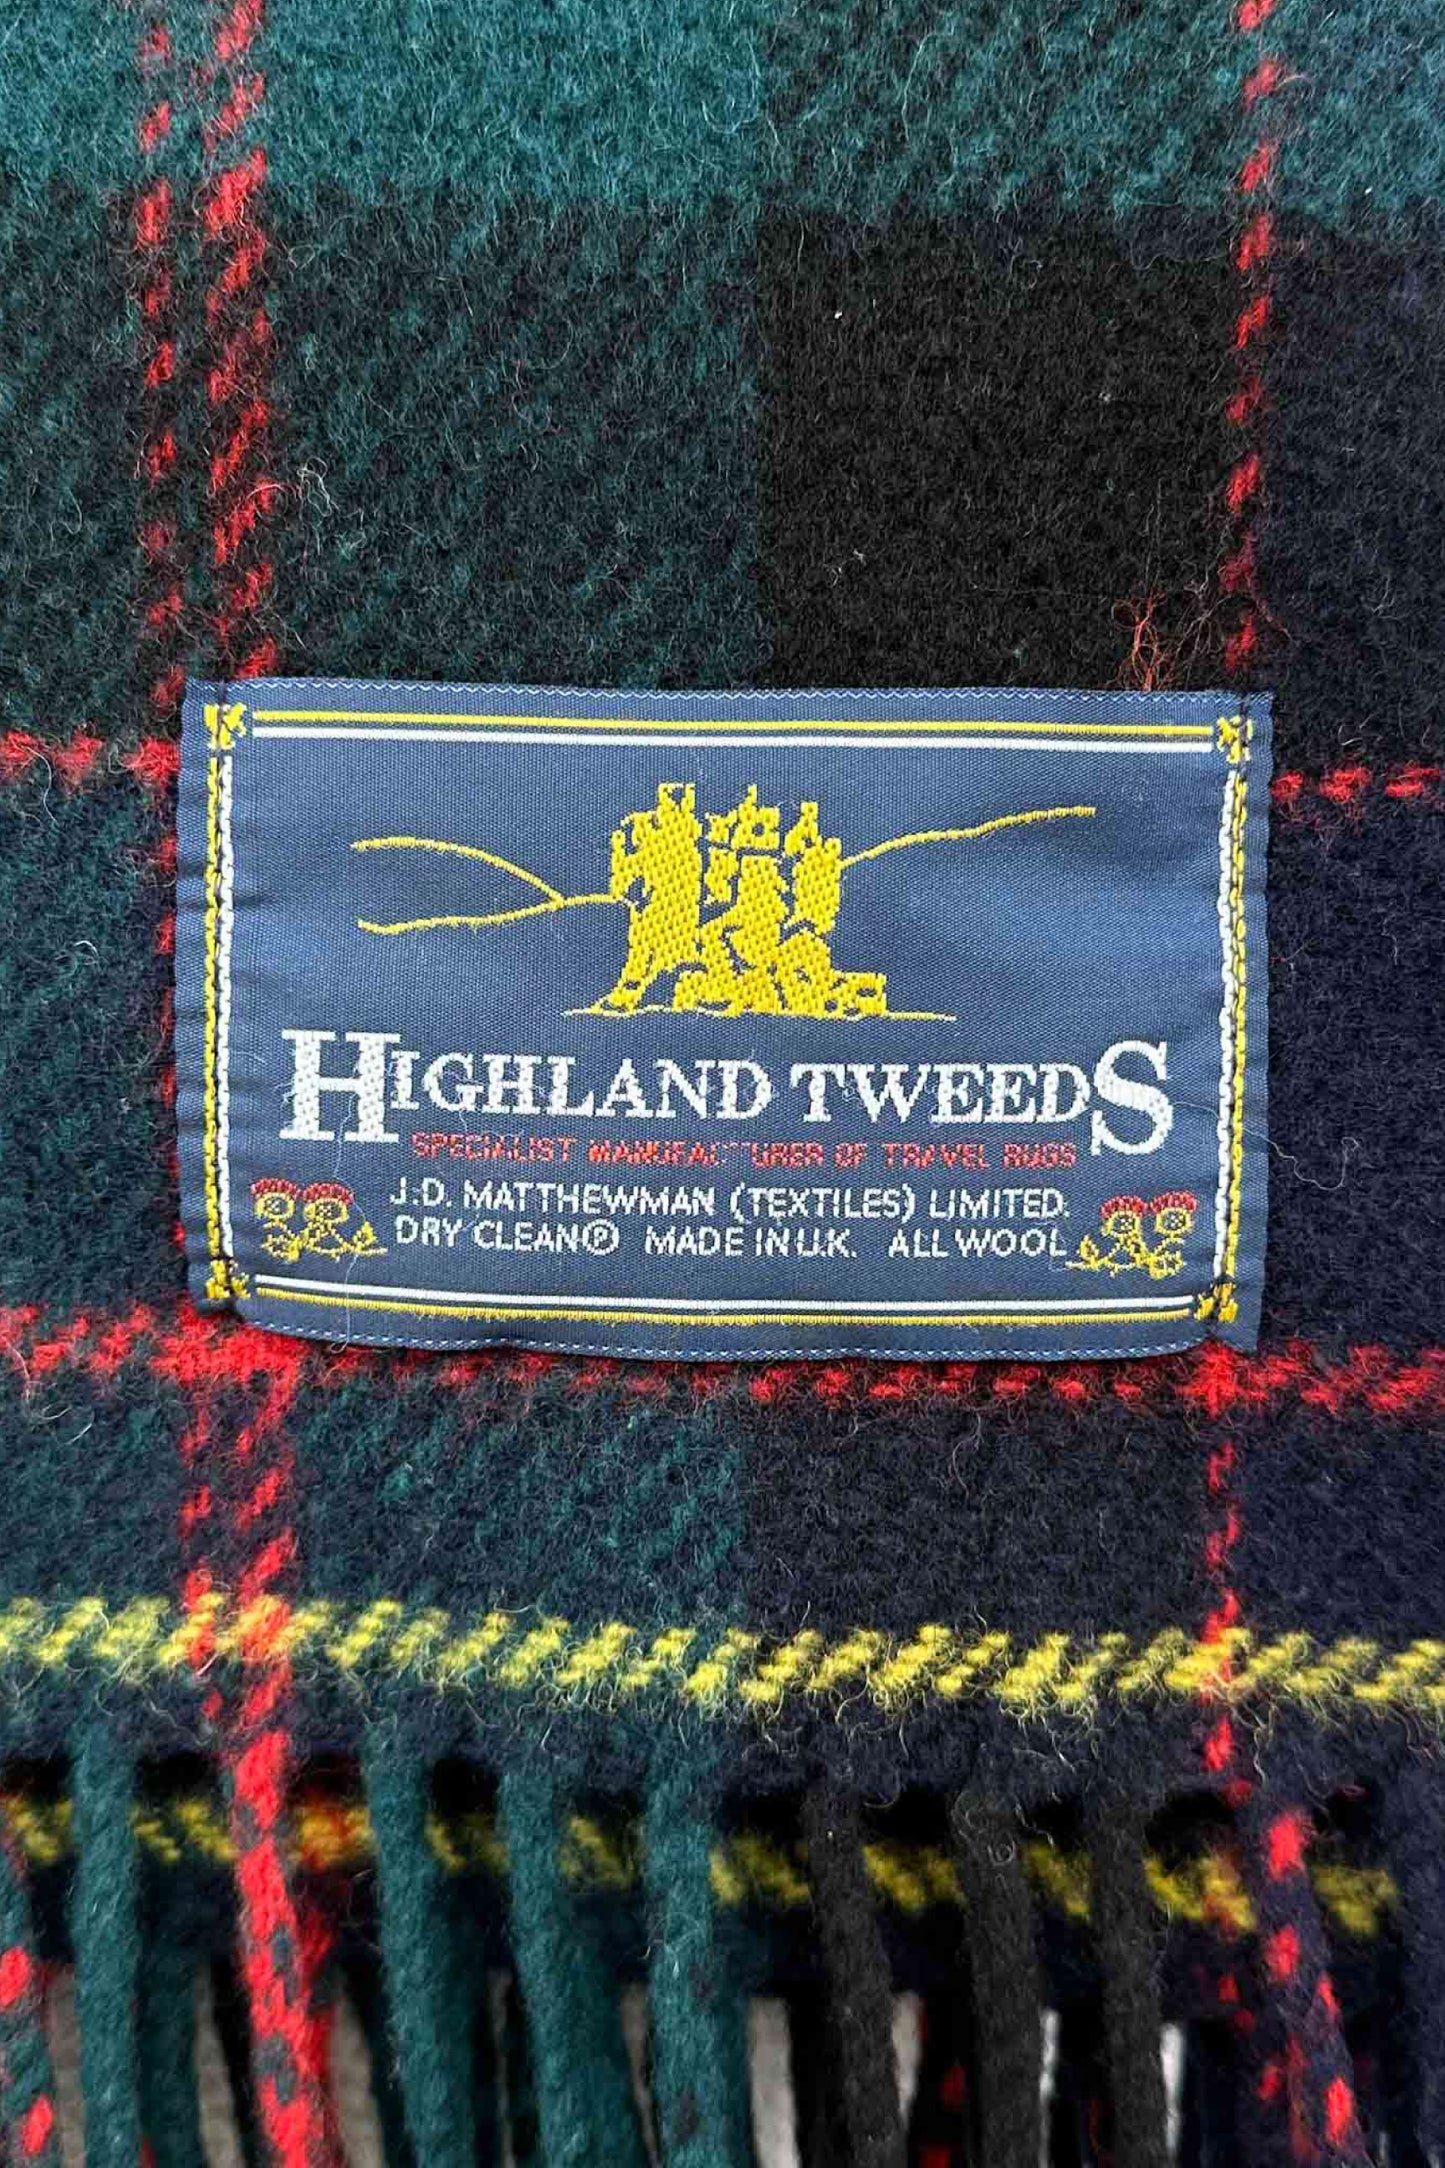 Made in UK HIGHLAND TWEEDS travel rugs